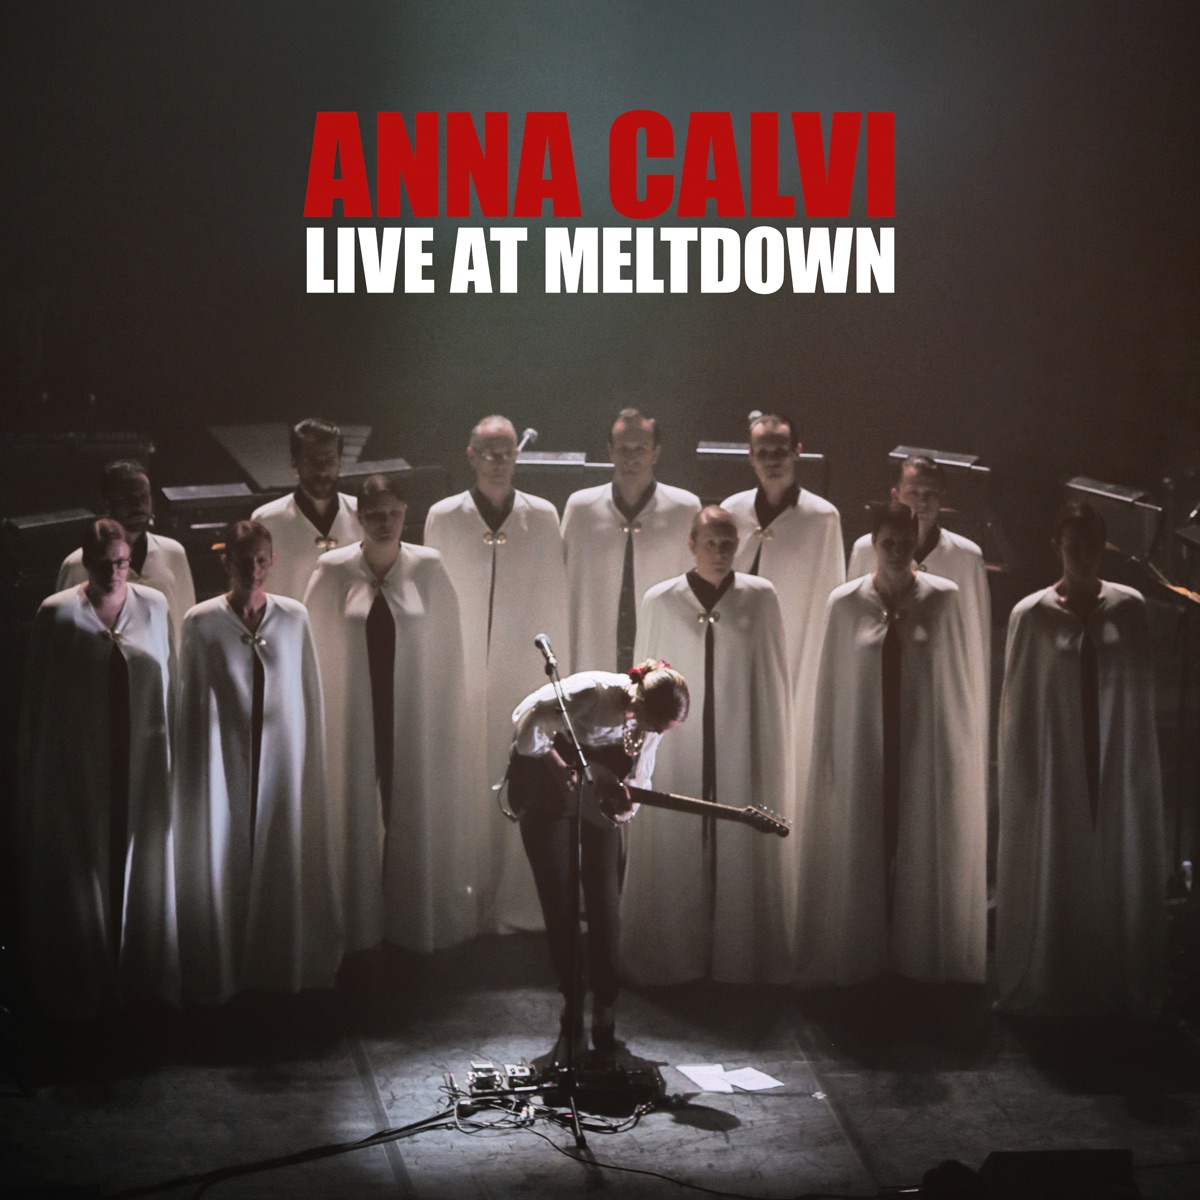 Live at Meltdown by Anna Calvi on Apple Music